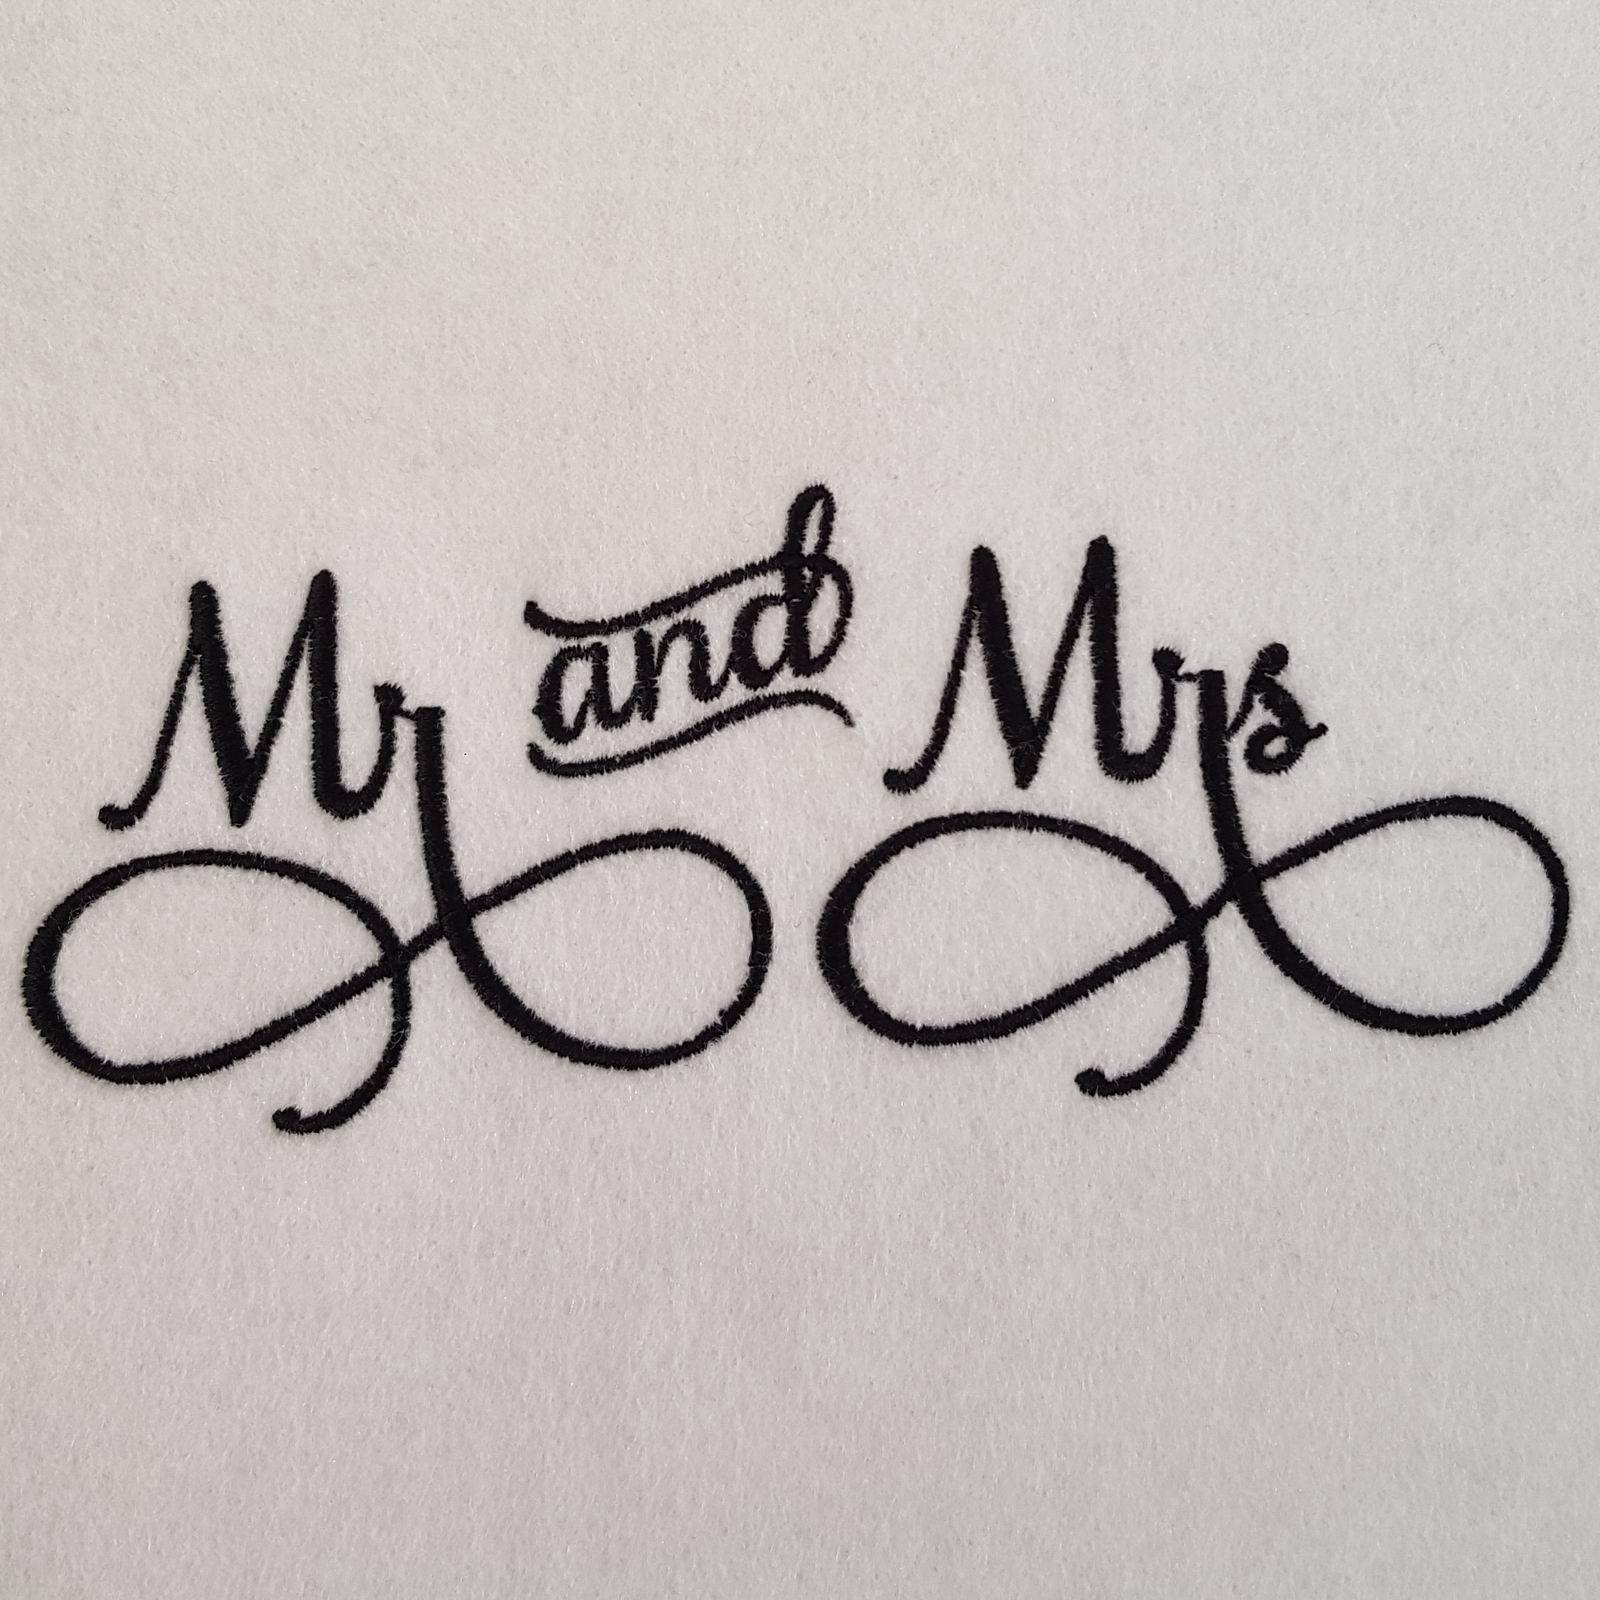 Matching Monogram Mr and Mrs Eyeglass Cases - aStitch aHalf